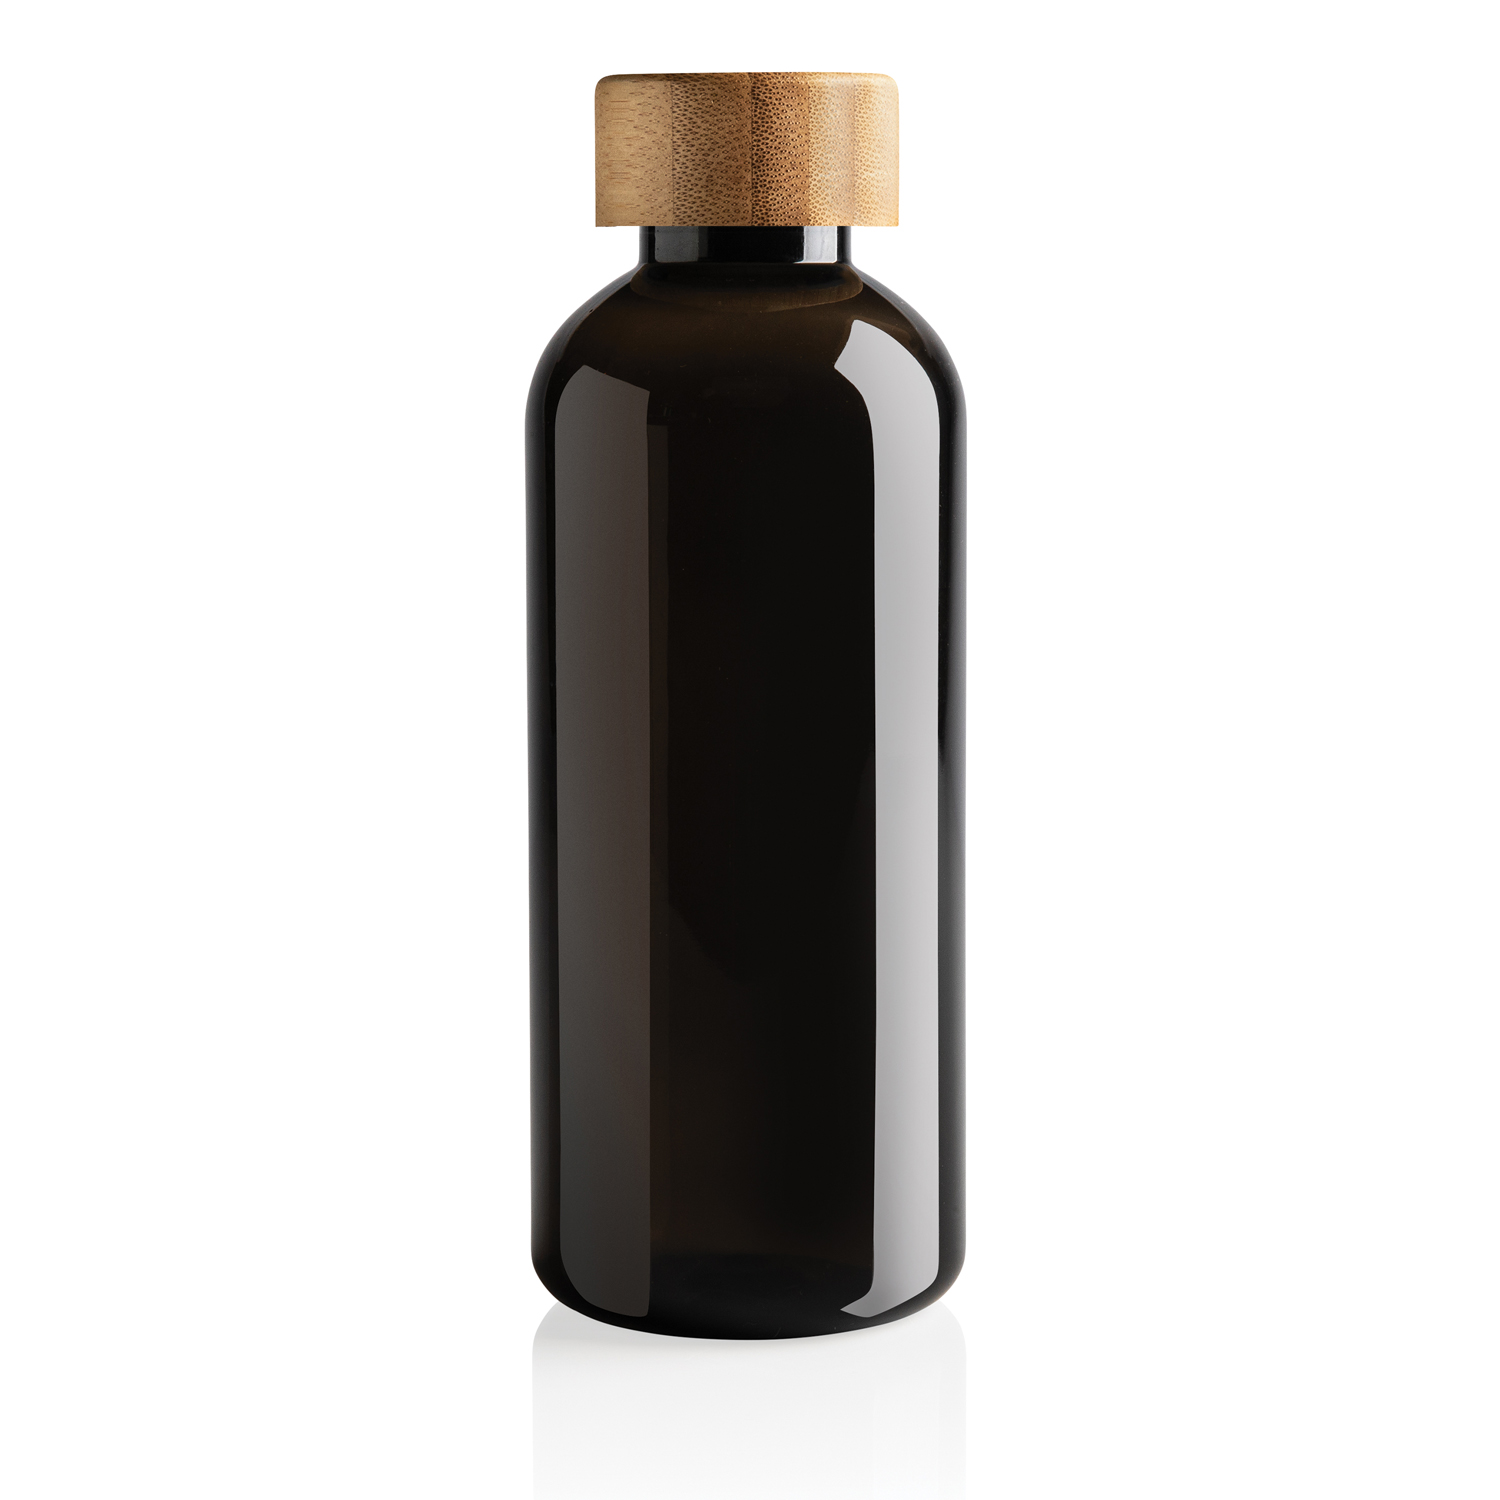 Бутылка для воды из rPET (стандарт GRS) с крышкой из бамбука FSC®